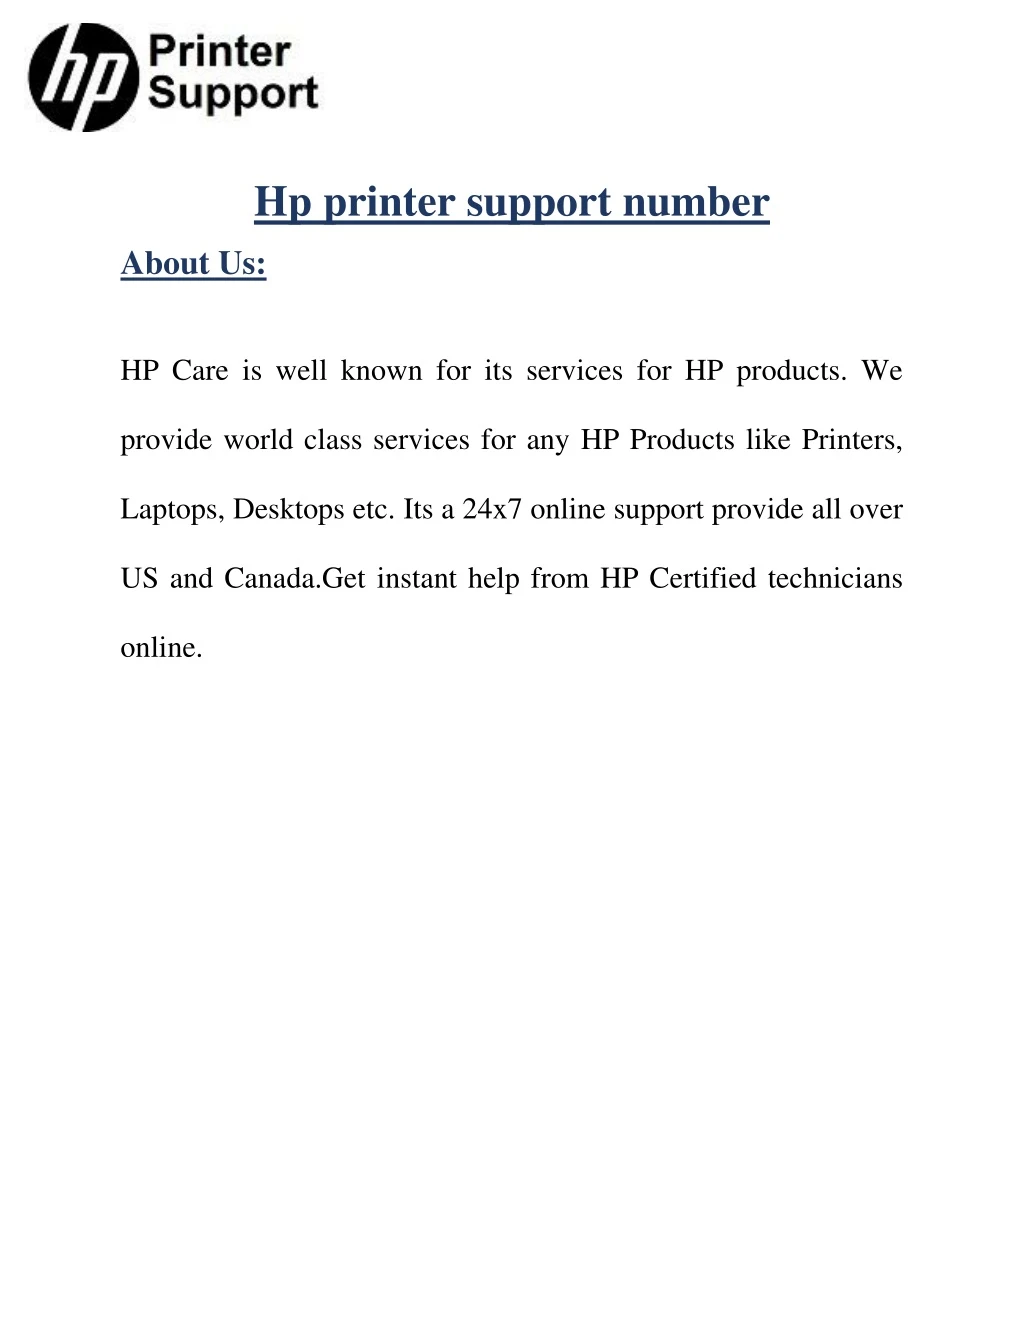 hp printer support number n.